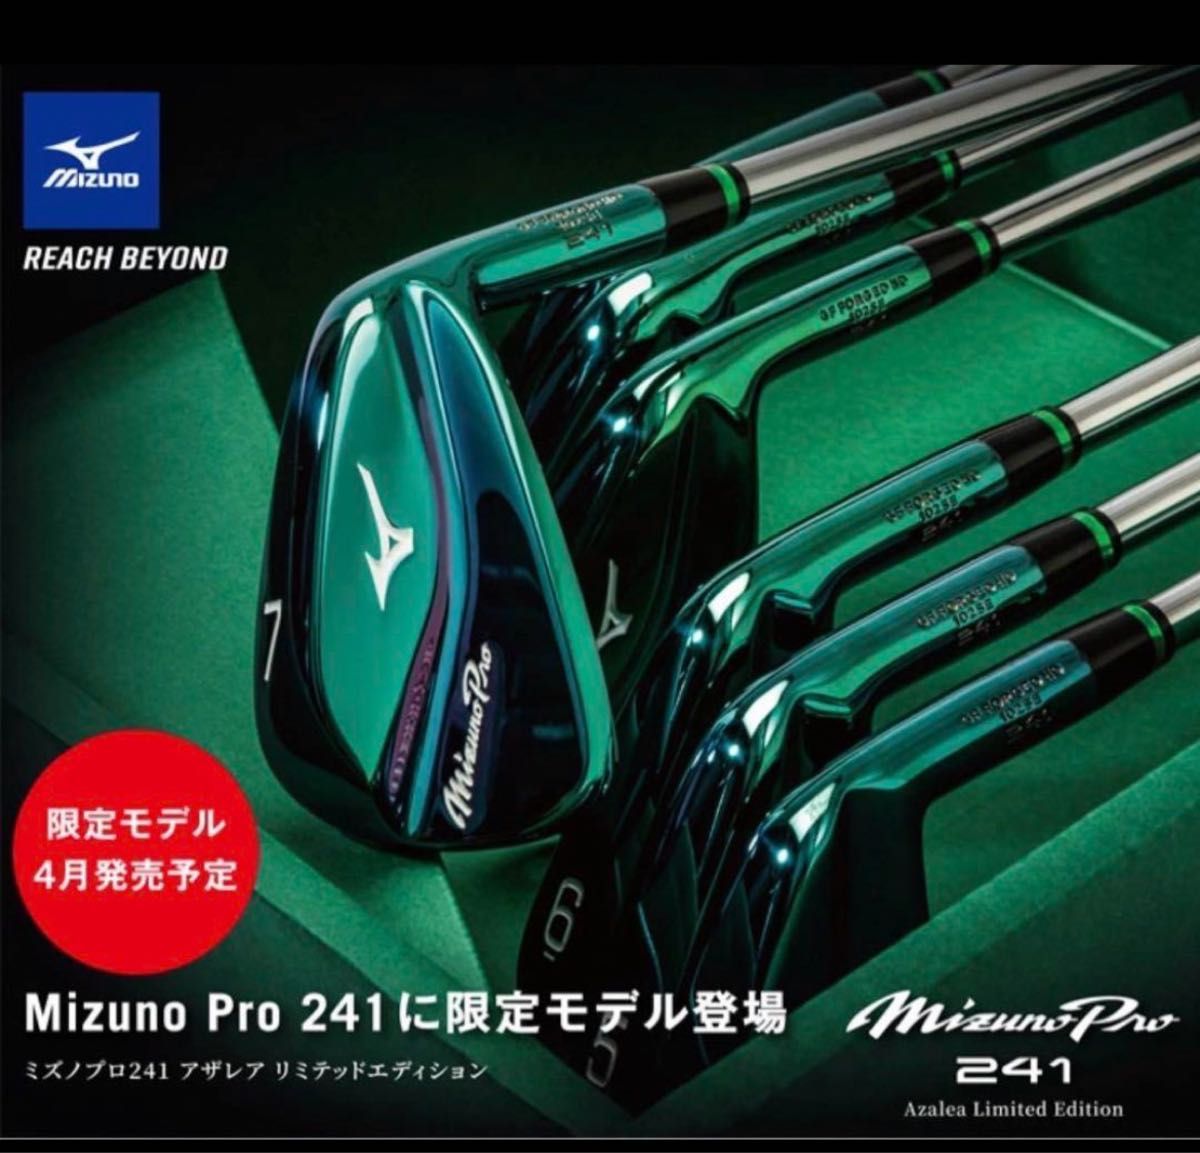 Mizuno Pro 241 Azalea Limited Edition